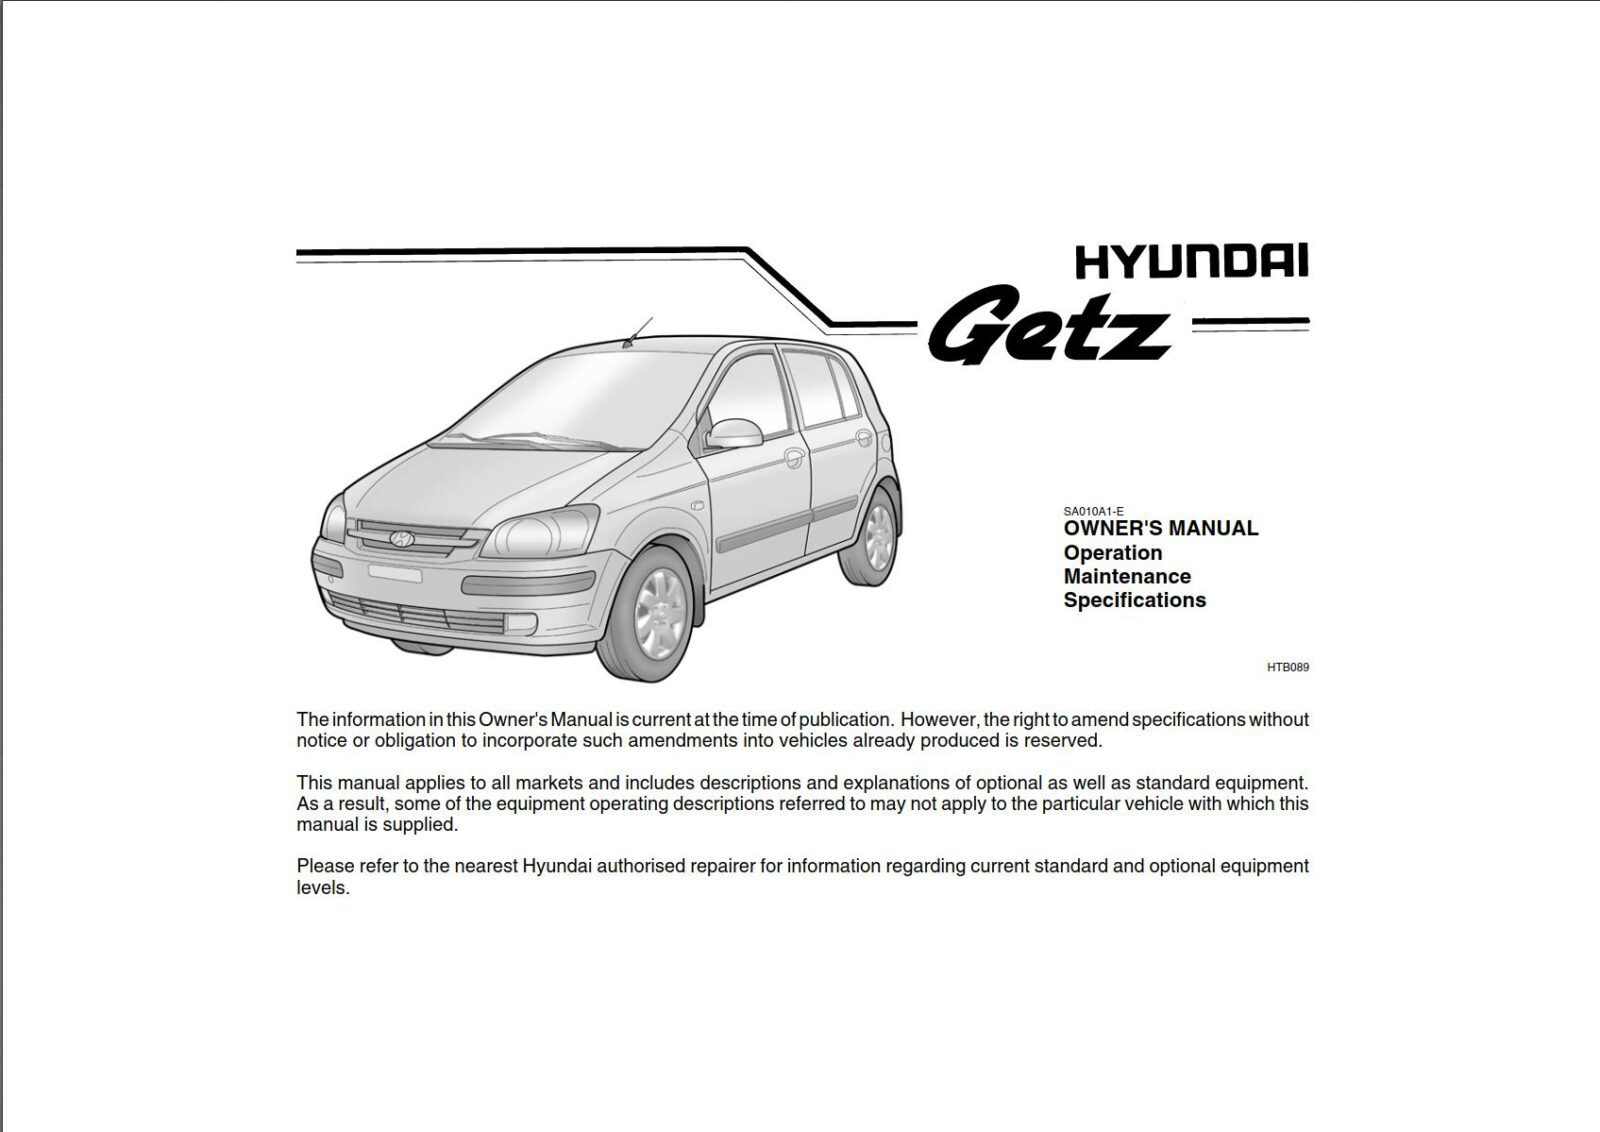 Hyundai Getz 2005 Owner's Manual PDF Download